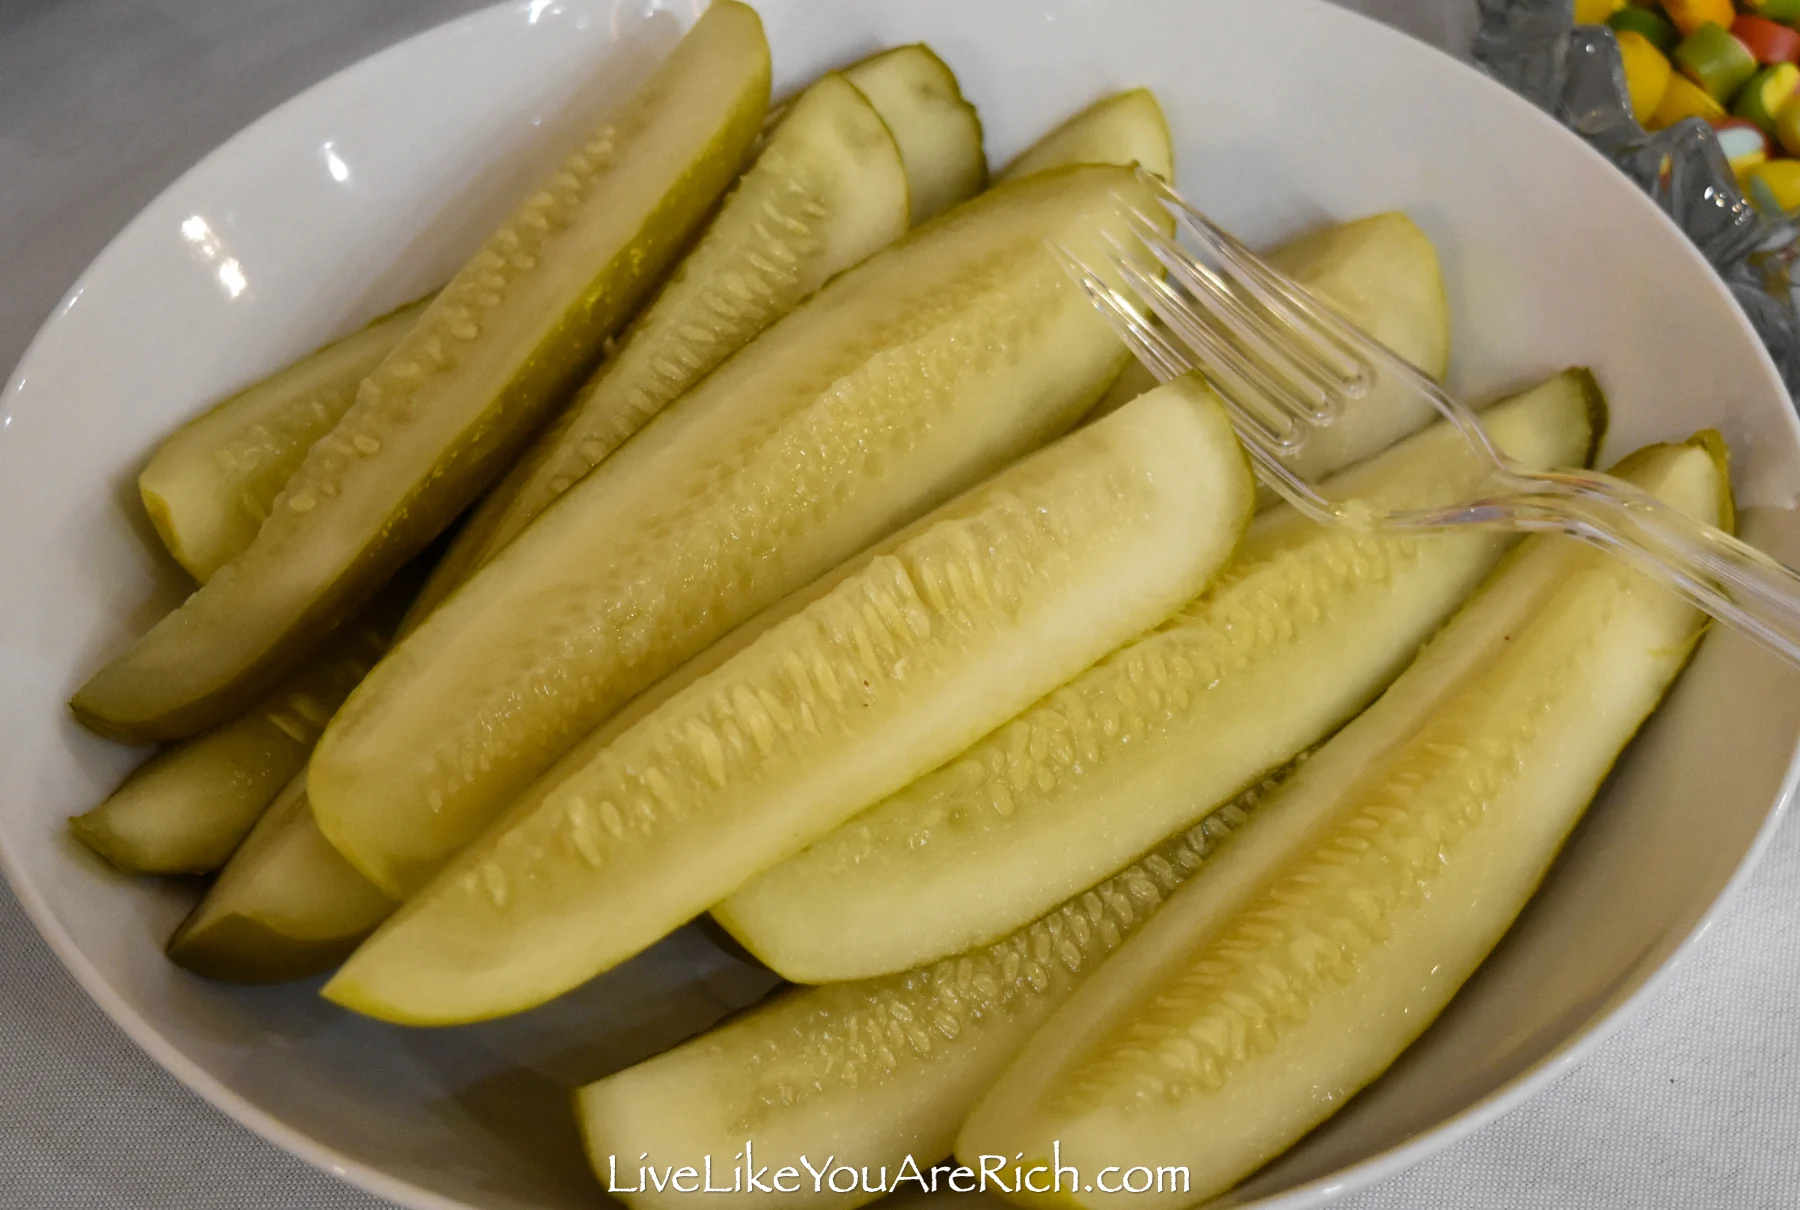 Cucumber pickles